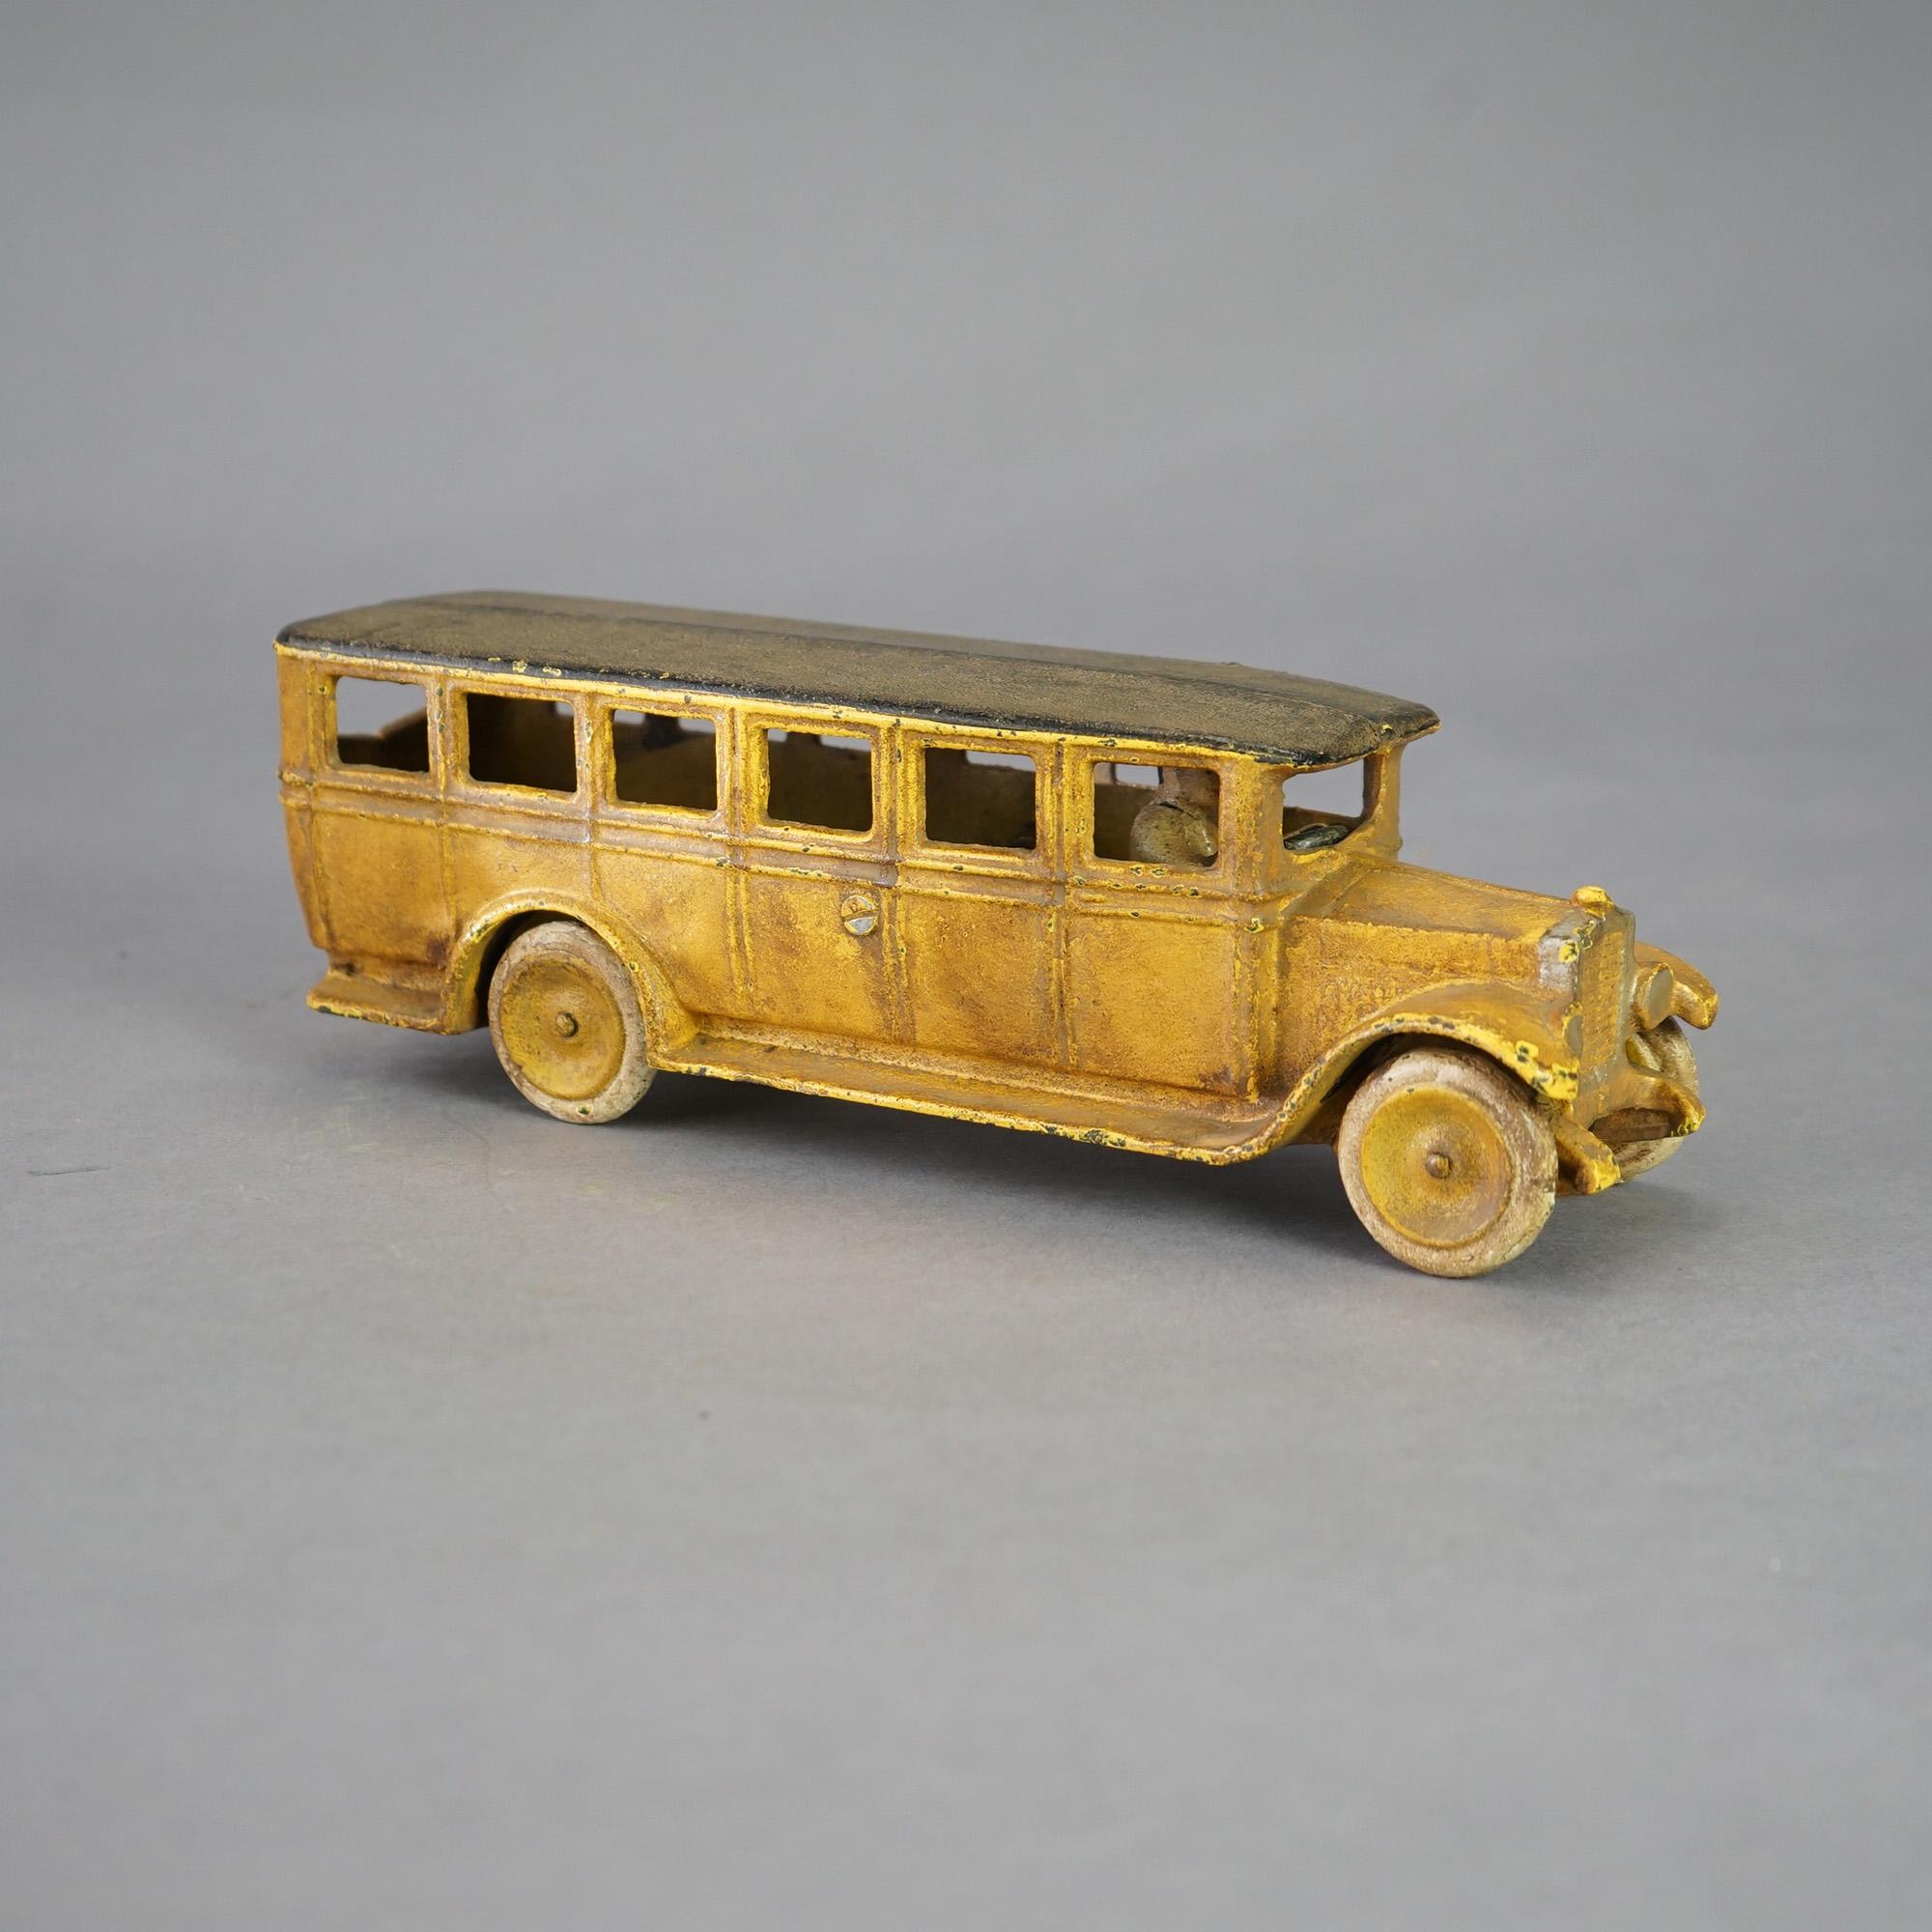 Vintage AB Skoglurd Cast Iron Toy  Passenger Bus, Maker Embossed as Photographed, 20th C

Measures - 3.5